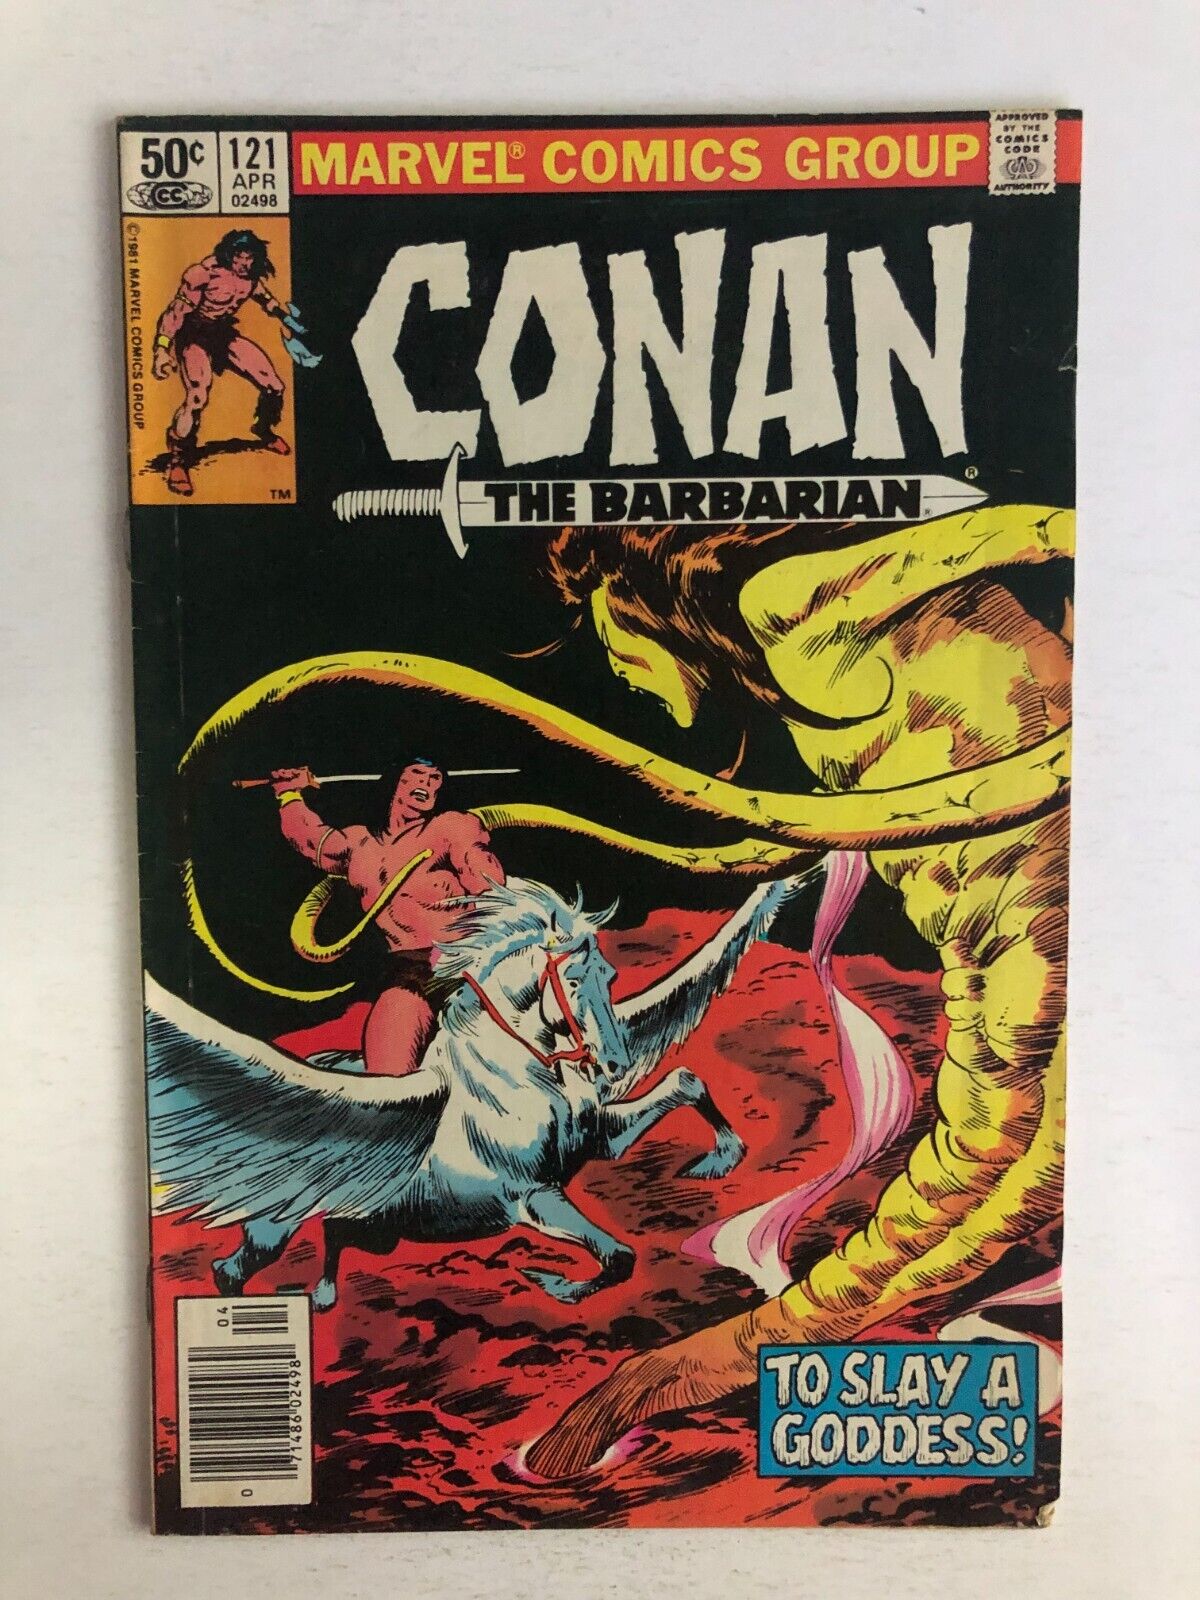 Conan The Barbarian #121 - J.M DeMatteis - 1981 - Possible CGC comic